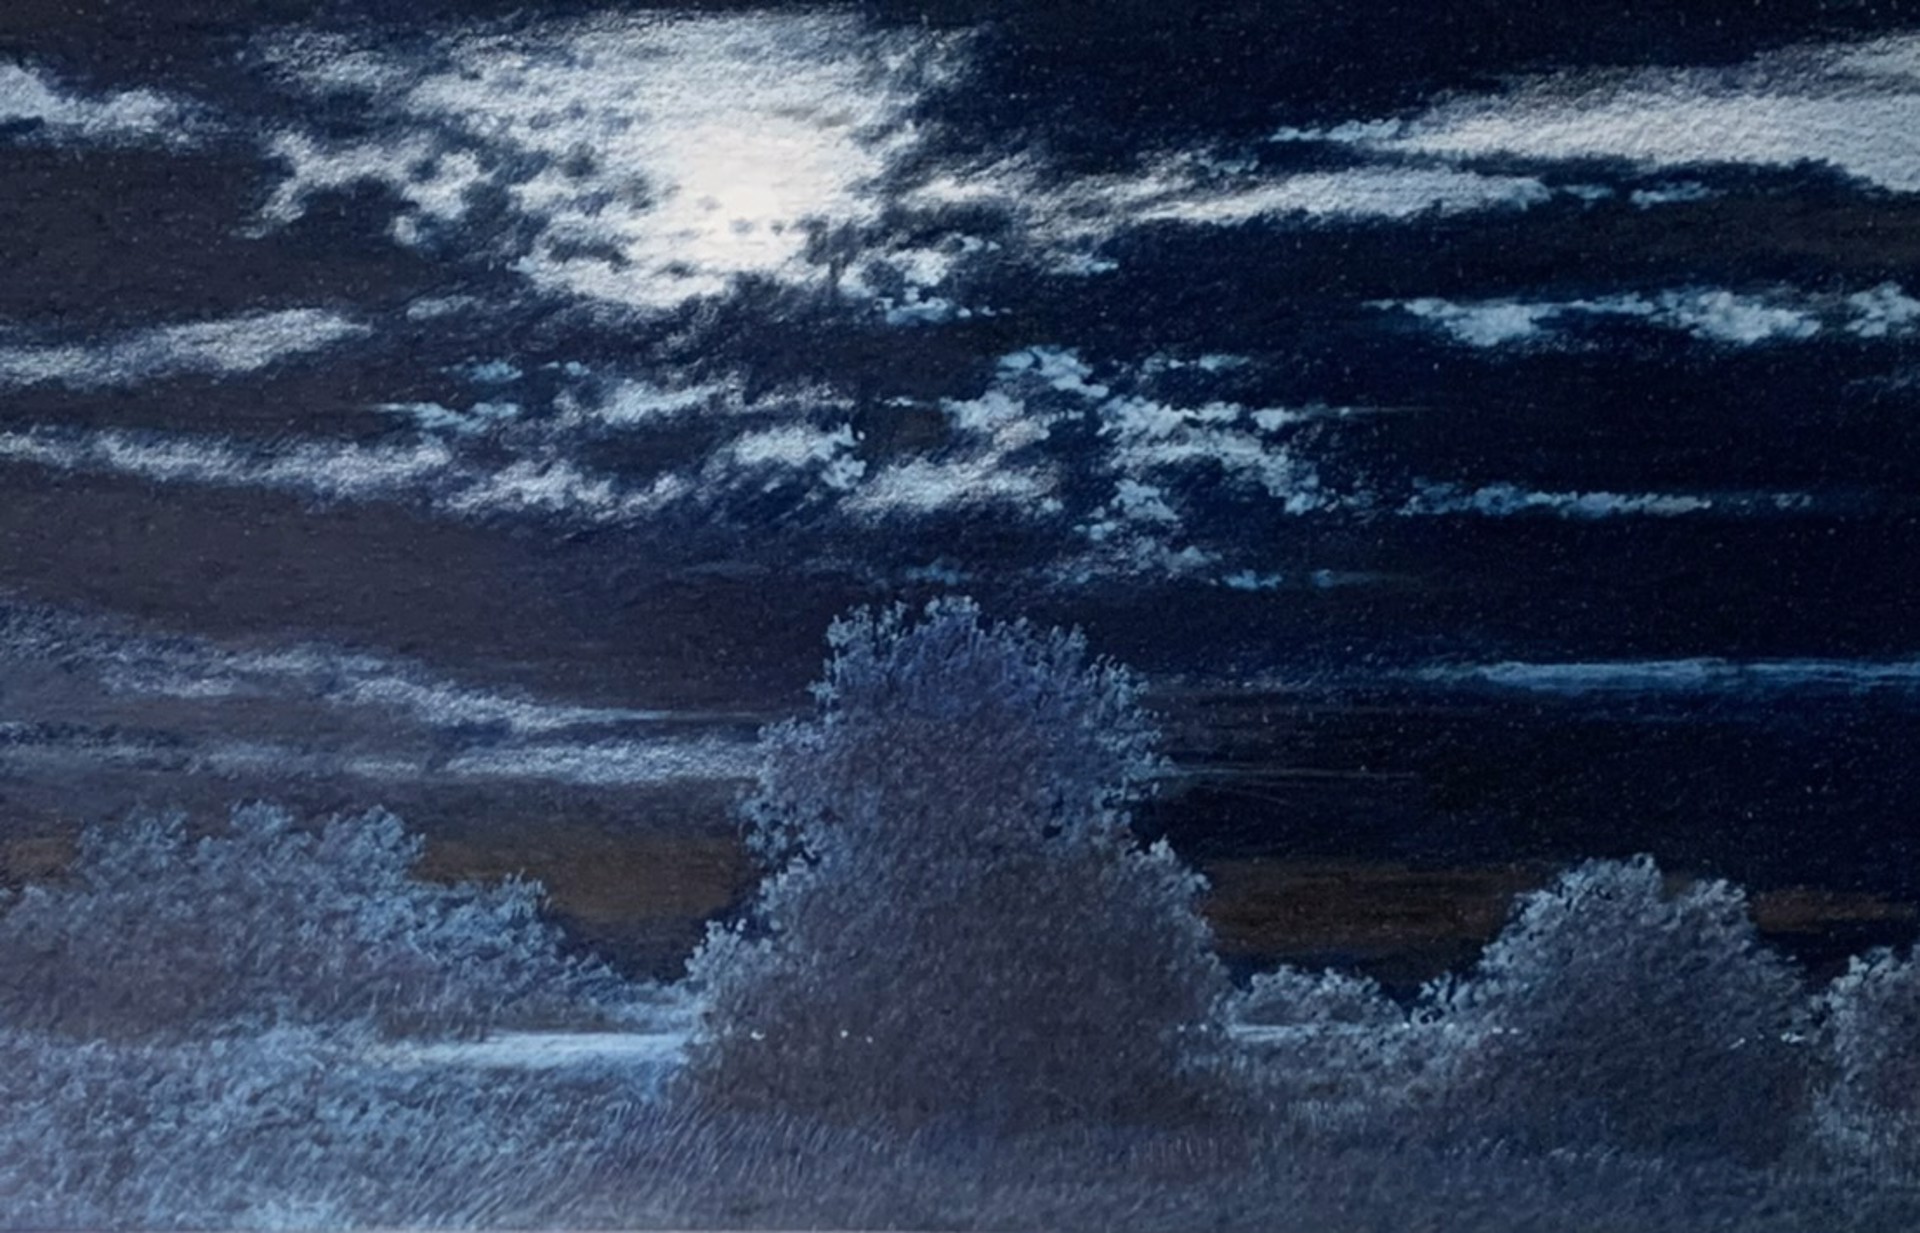 Night Seen by Allan Servoss